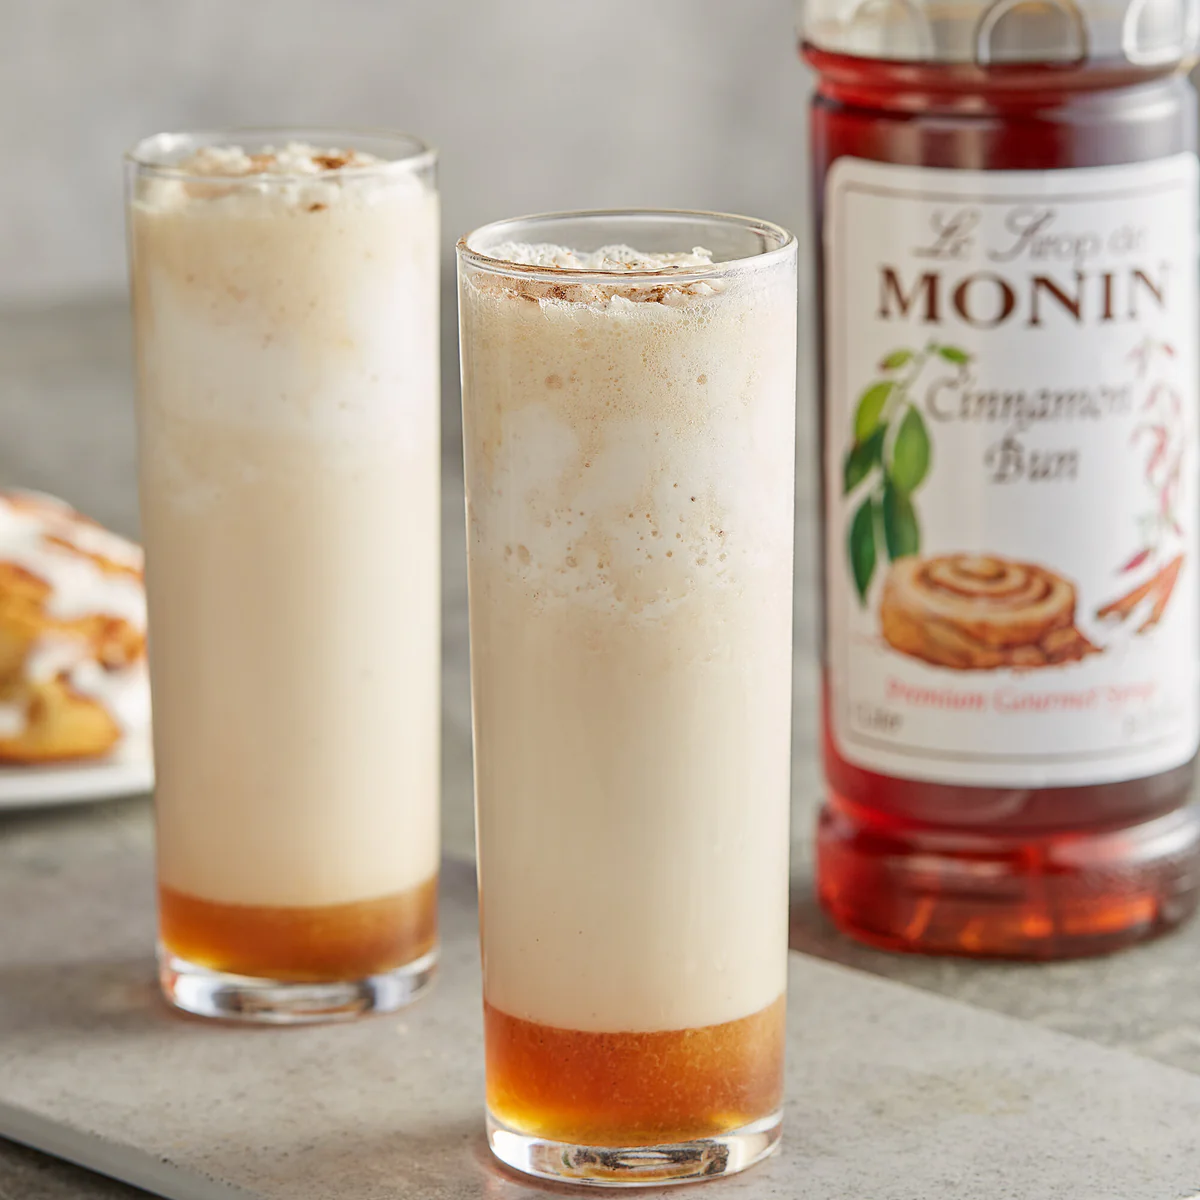 Monin Premium Cinnamon Bun Flavoring Syrup 1 liter, 4 per case